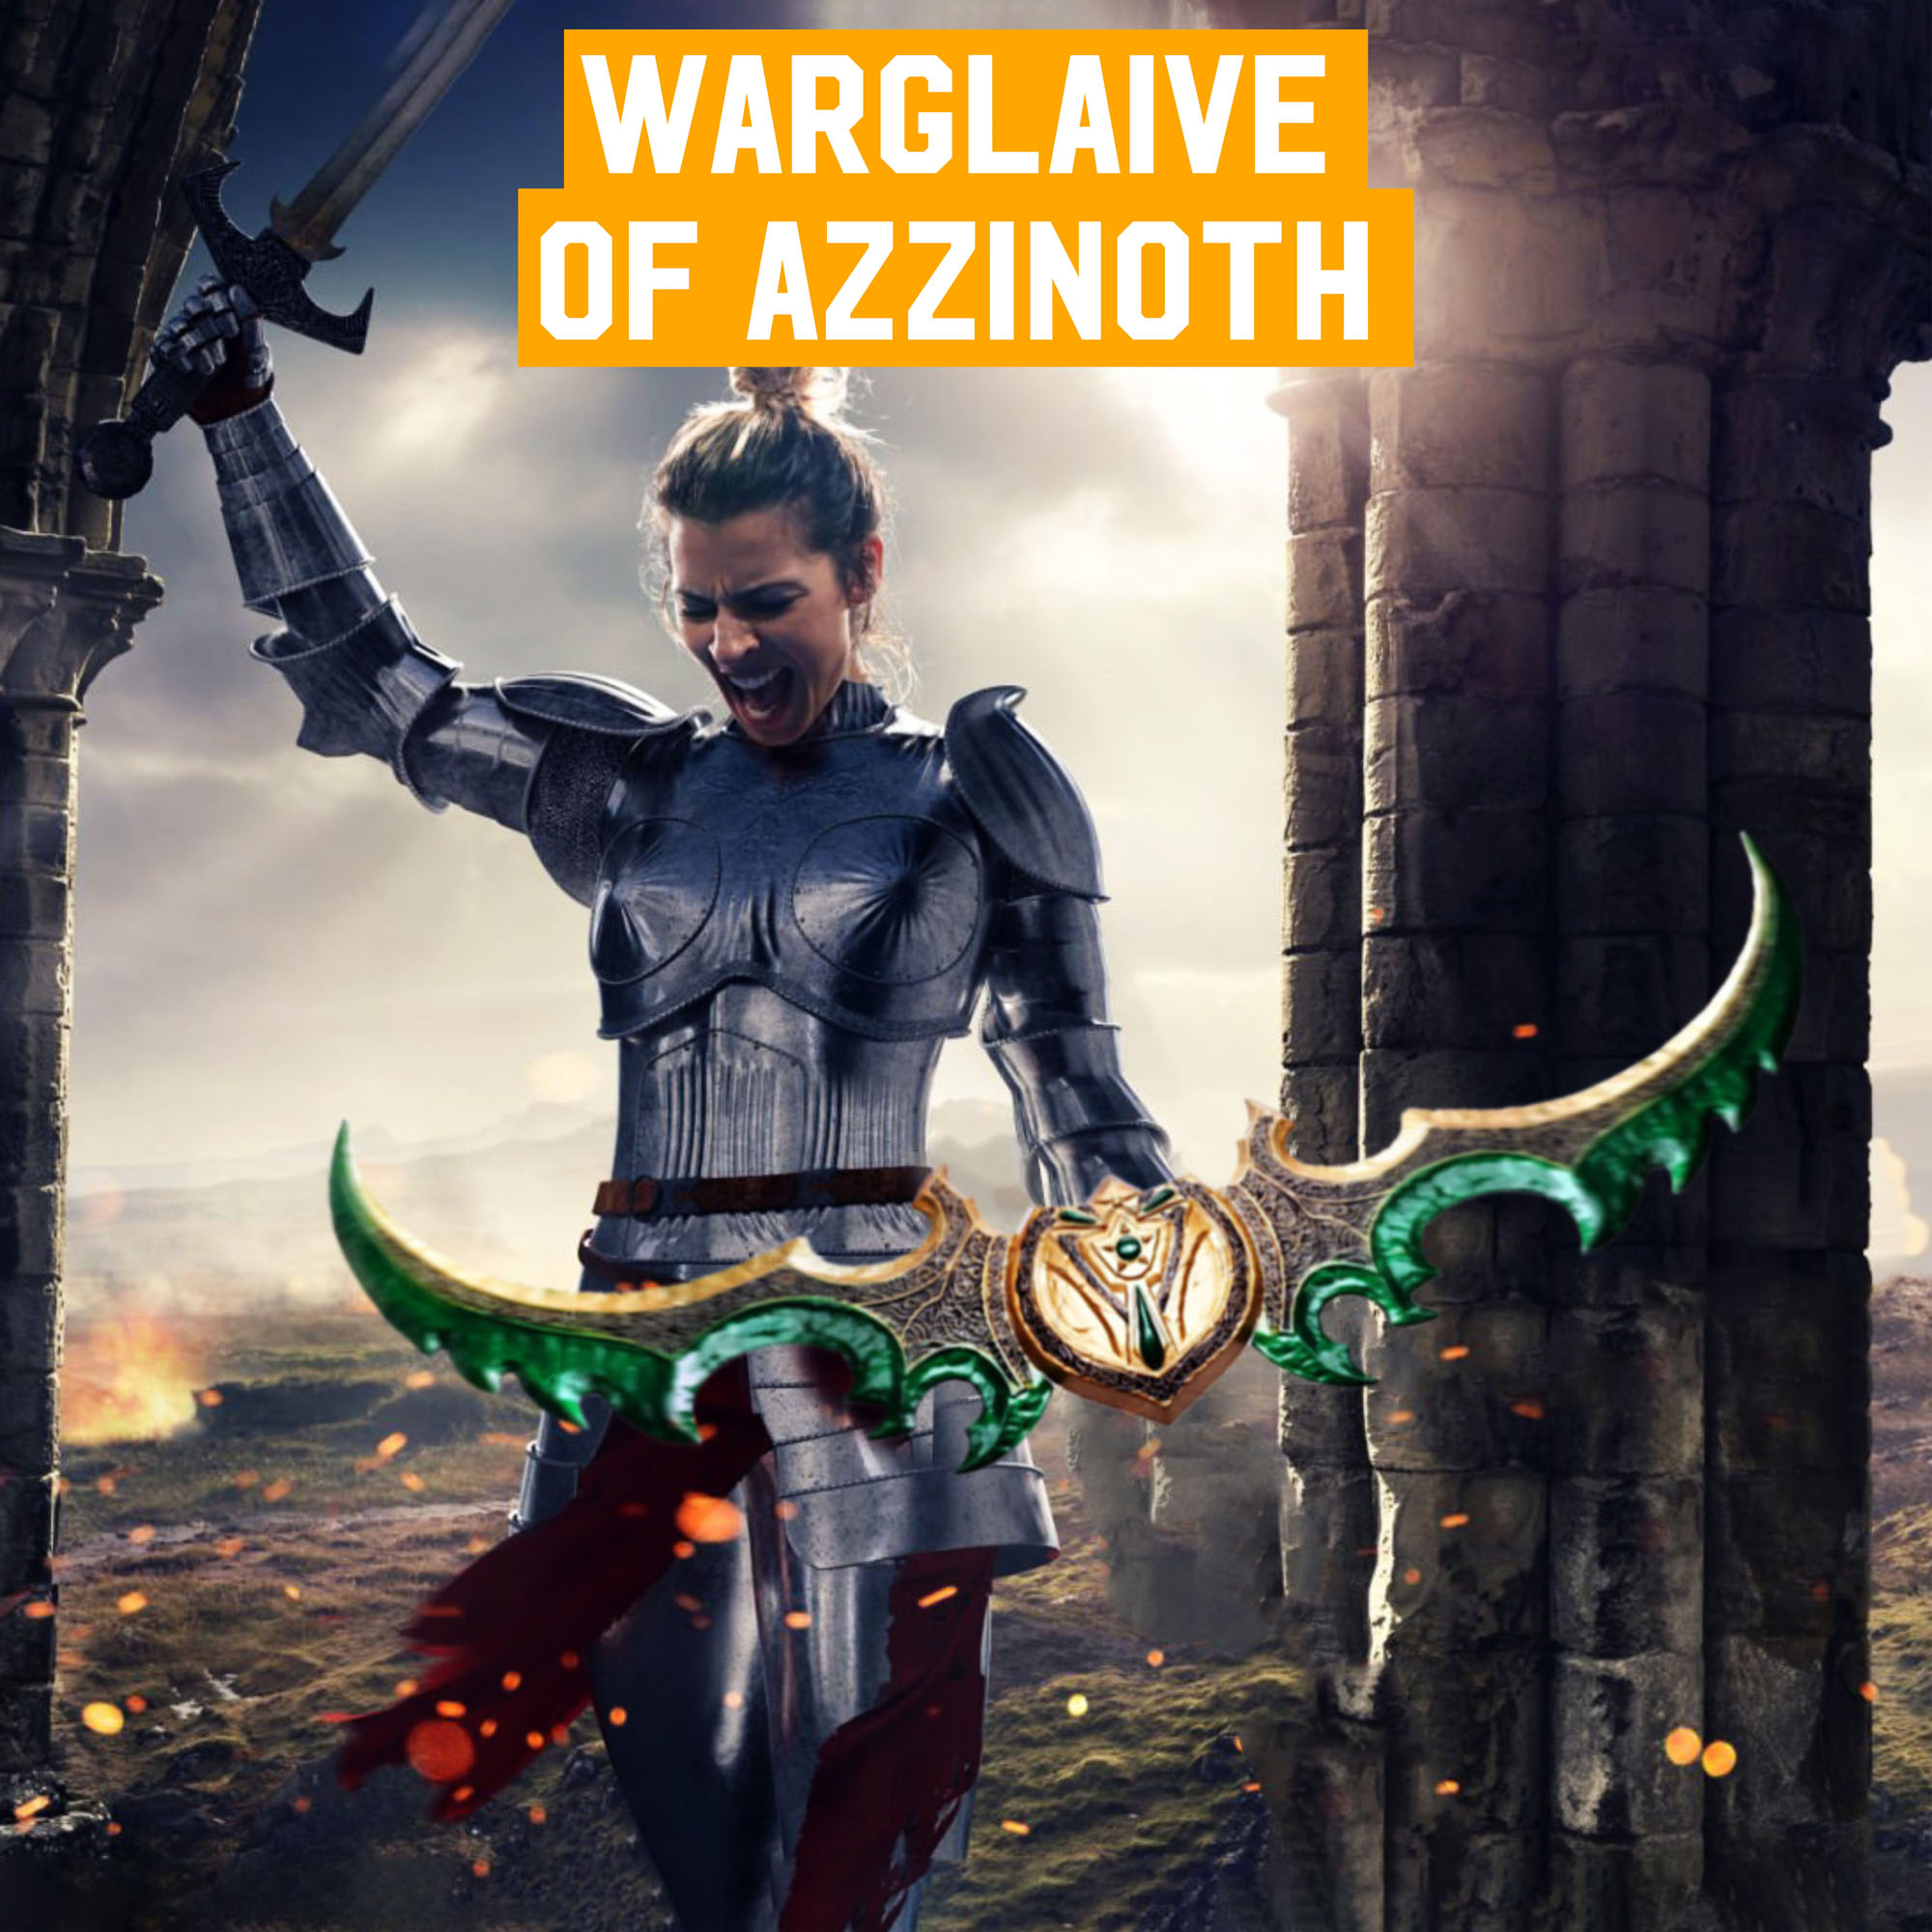 Warglaive of Azzinoth - World of Warcraft